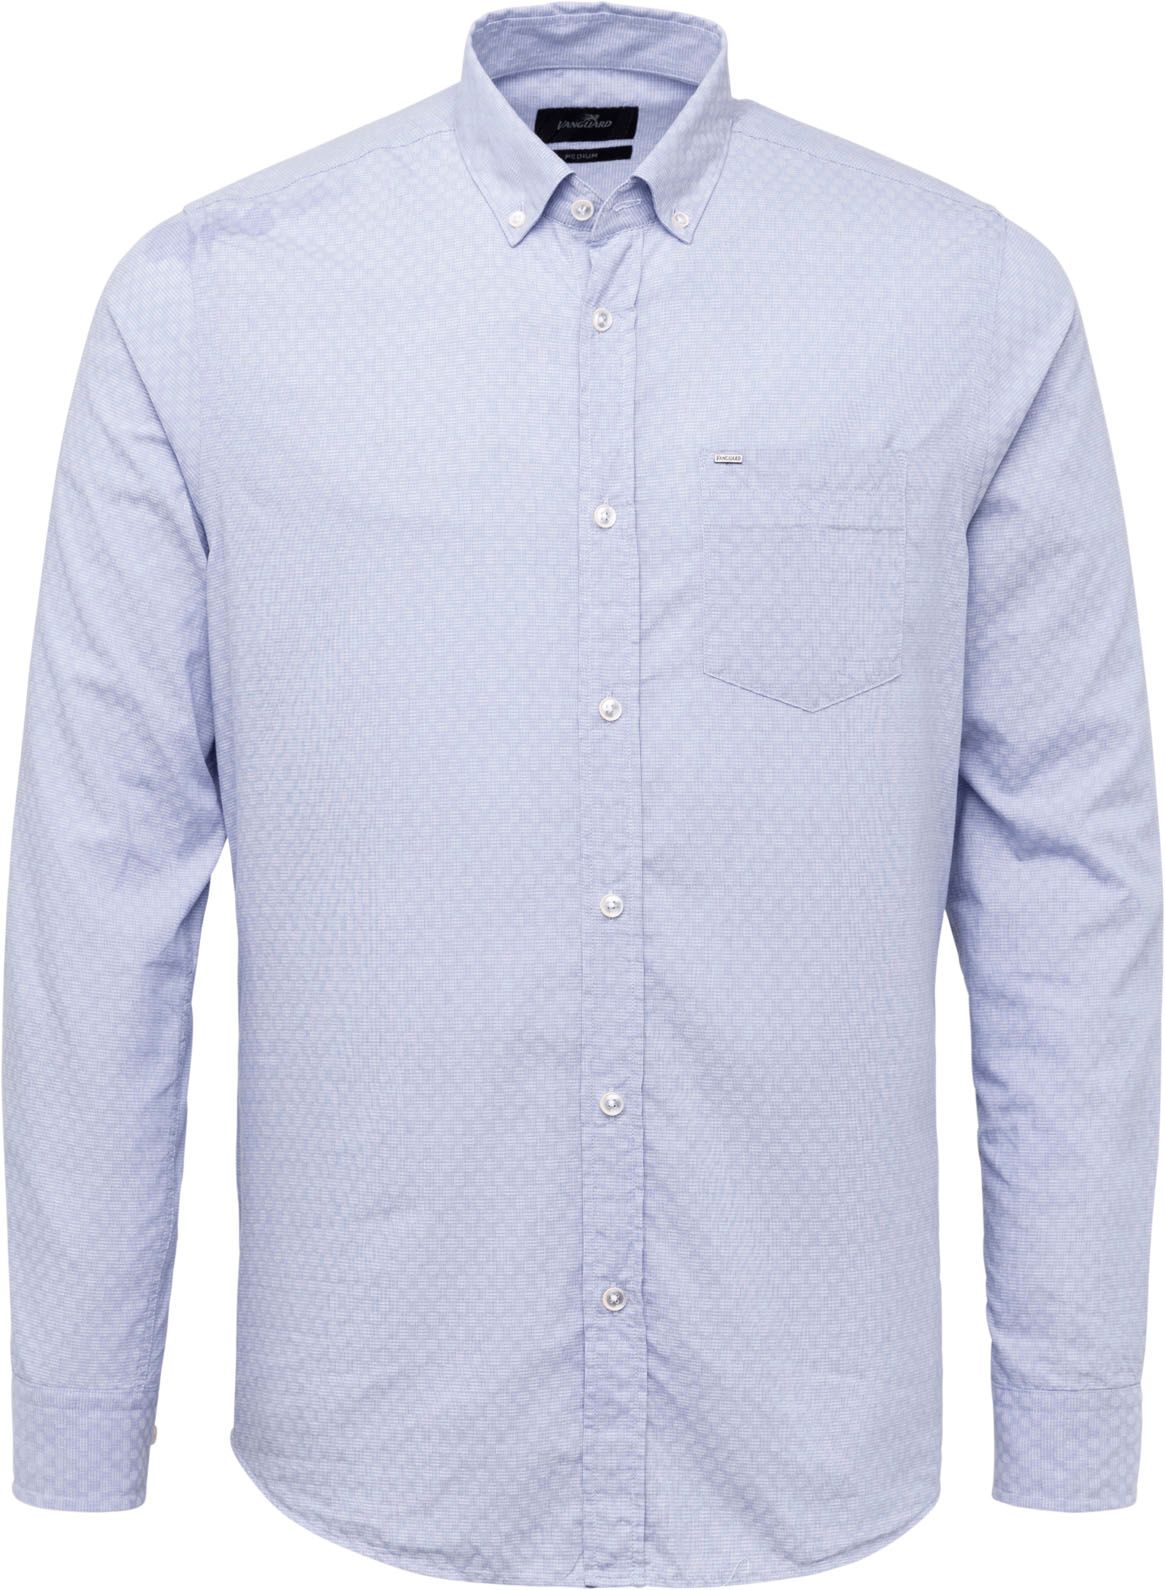 Vanguard Shirt Airy Peached Blue size L